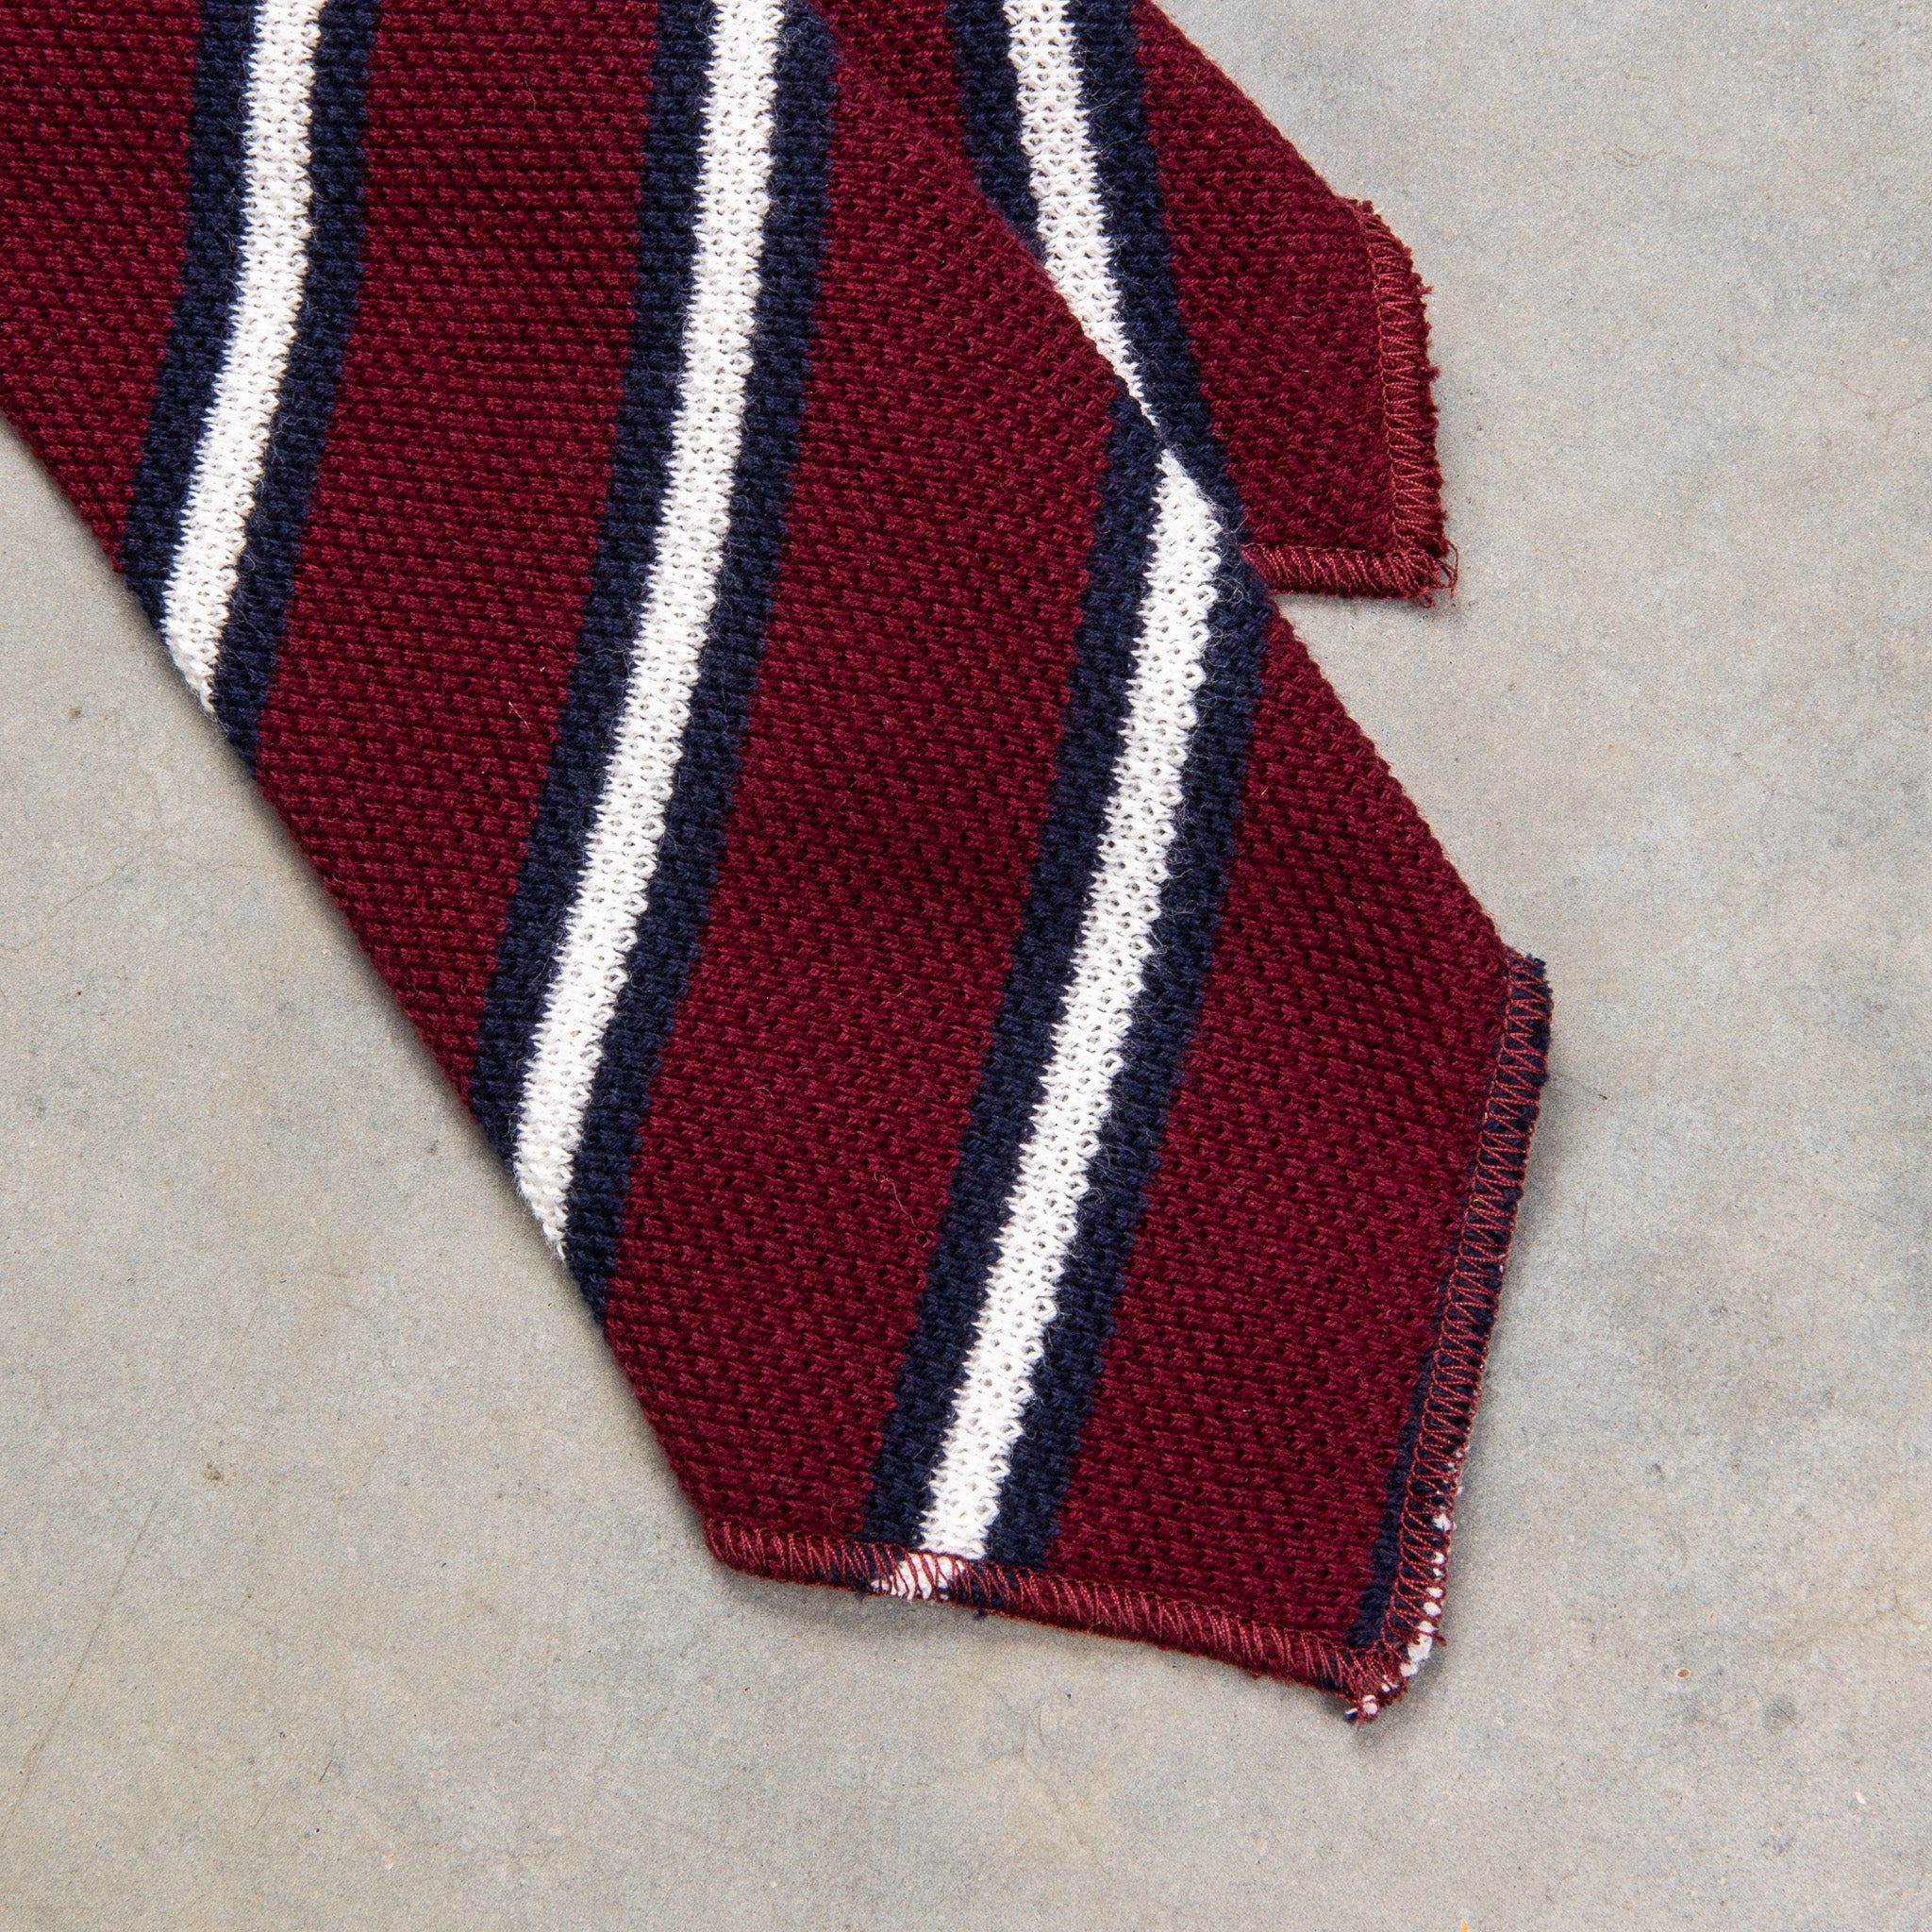 Engineered Garments Knit Tie Burgundy Stripe